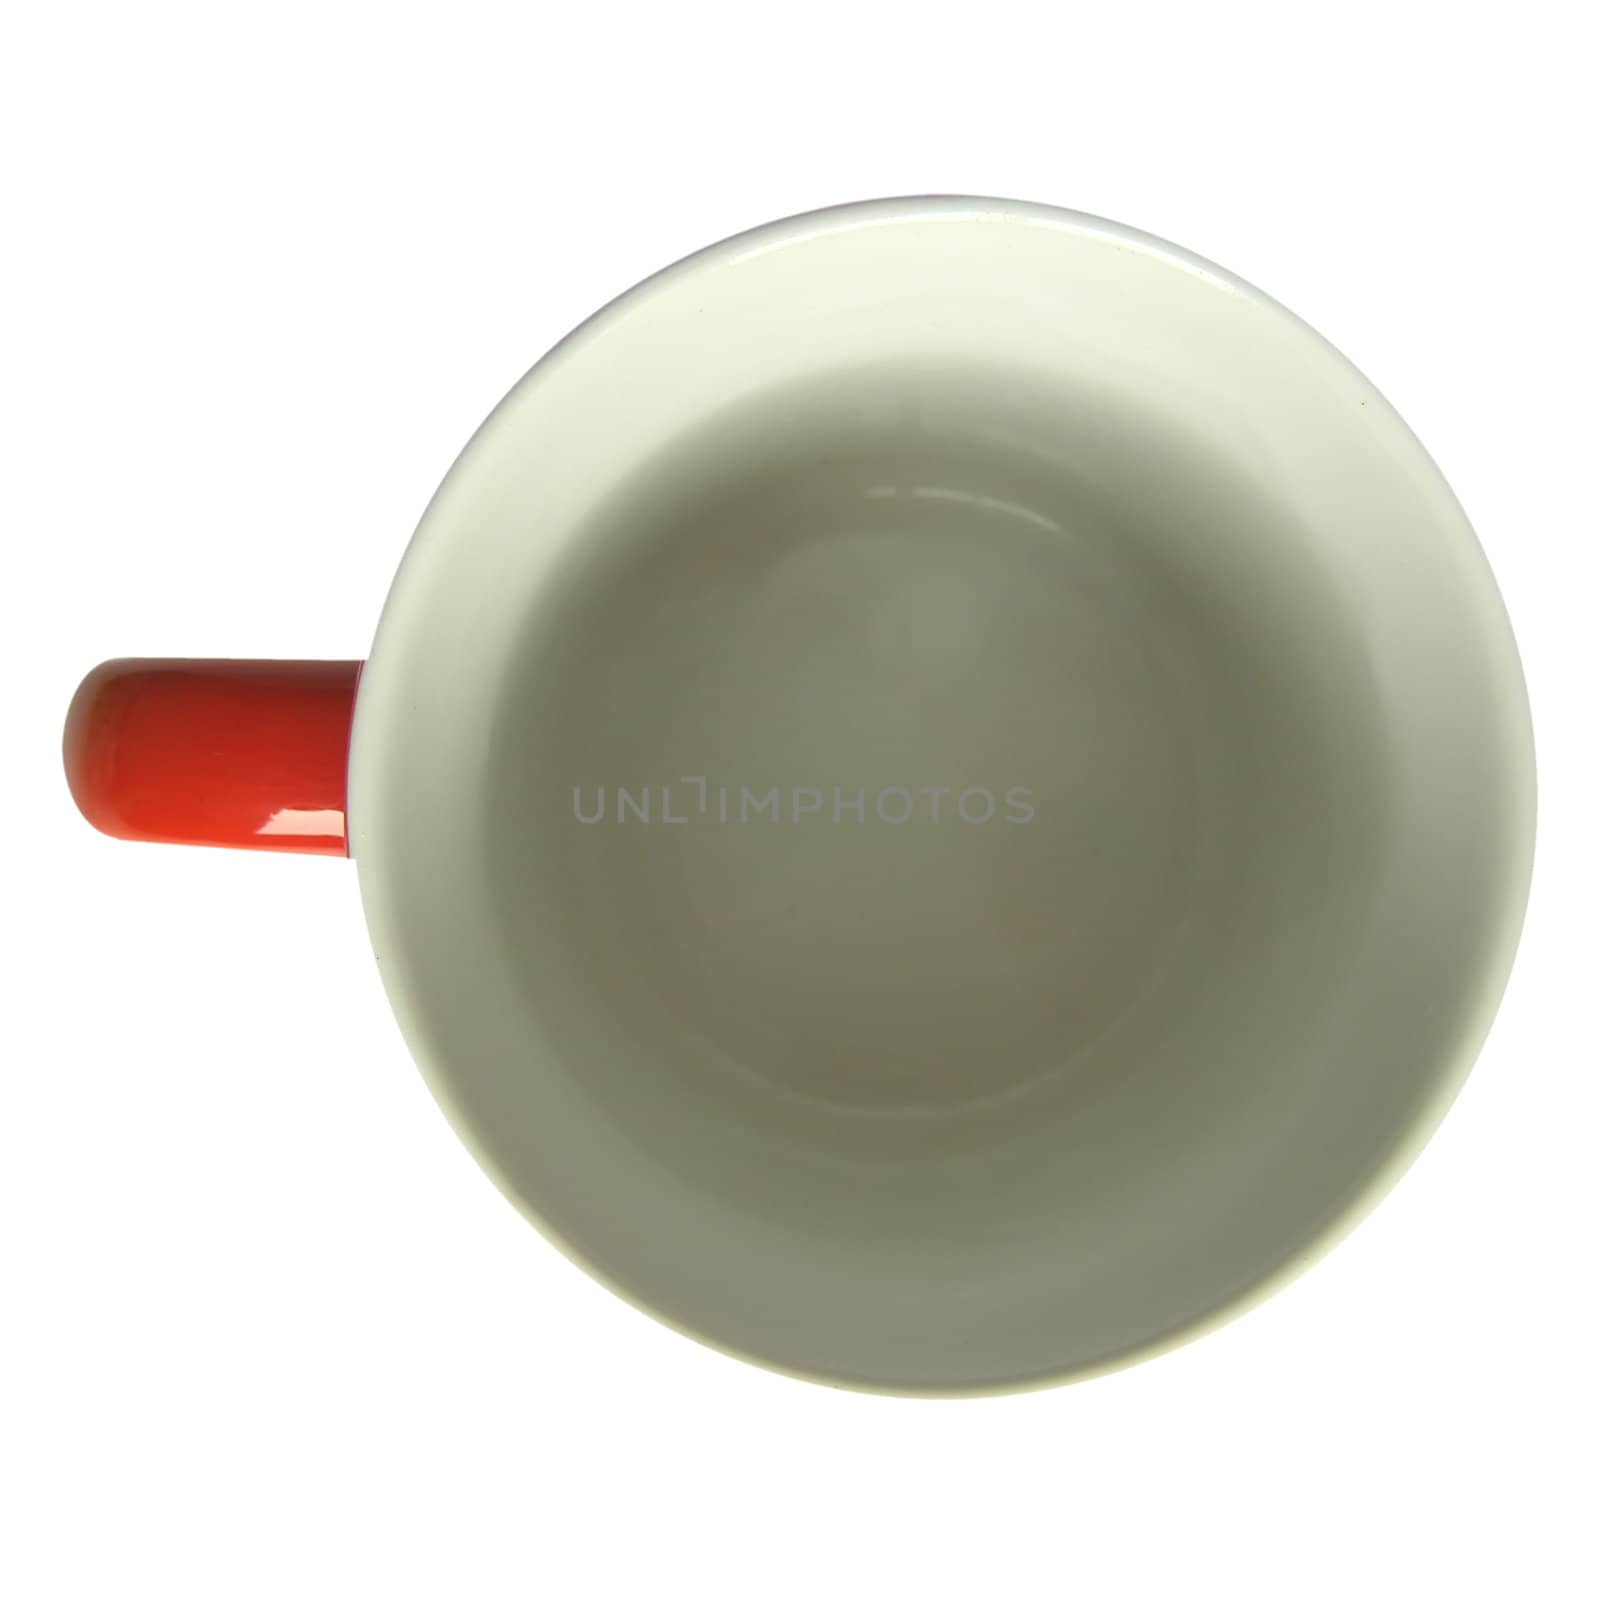 Mug cup by claudiodivizia